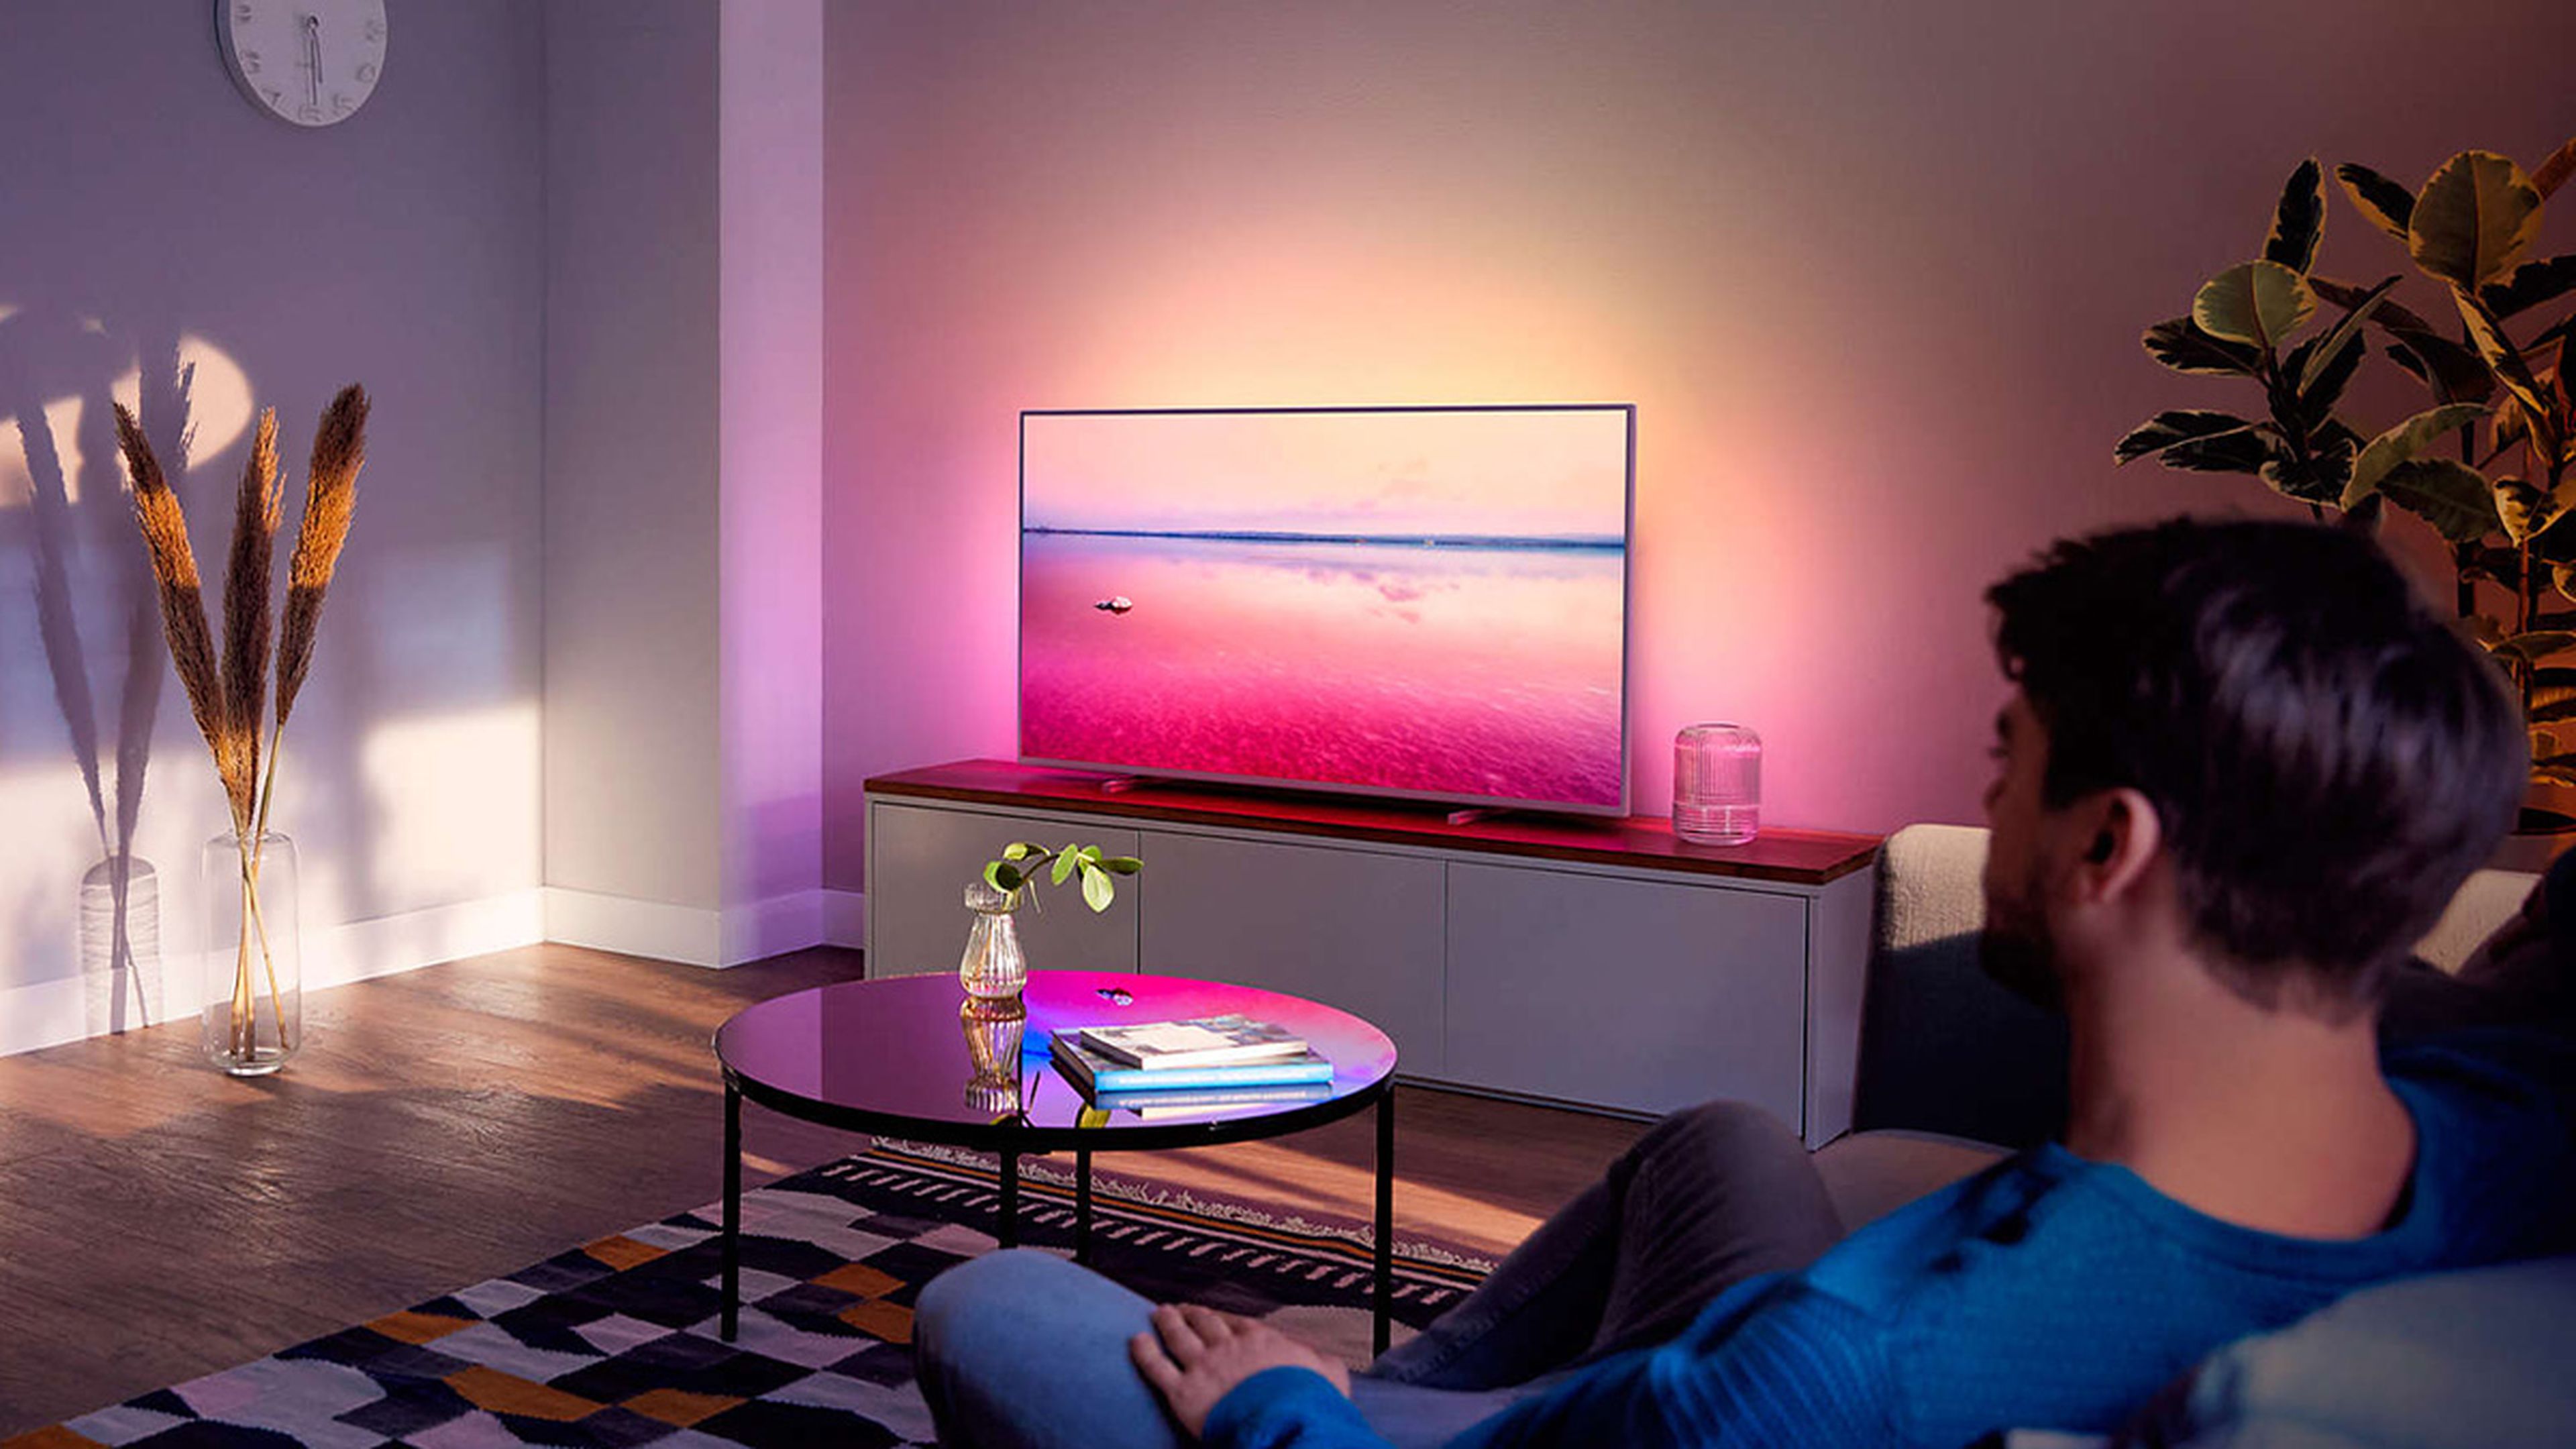 Conseguir esta smart TV 4K de Philips con Ambilight sale casi a